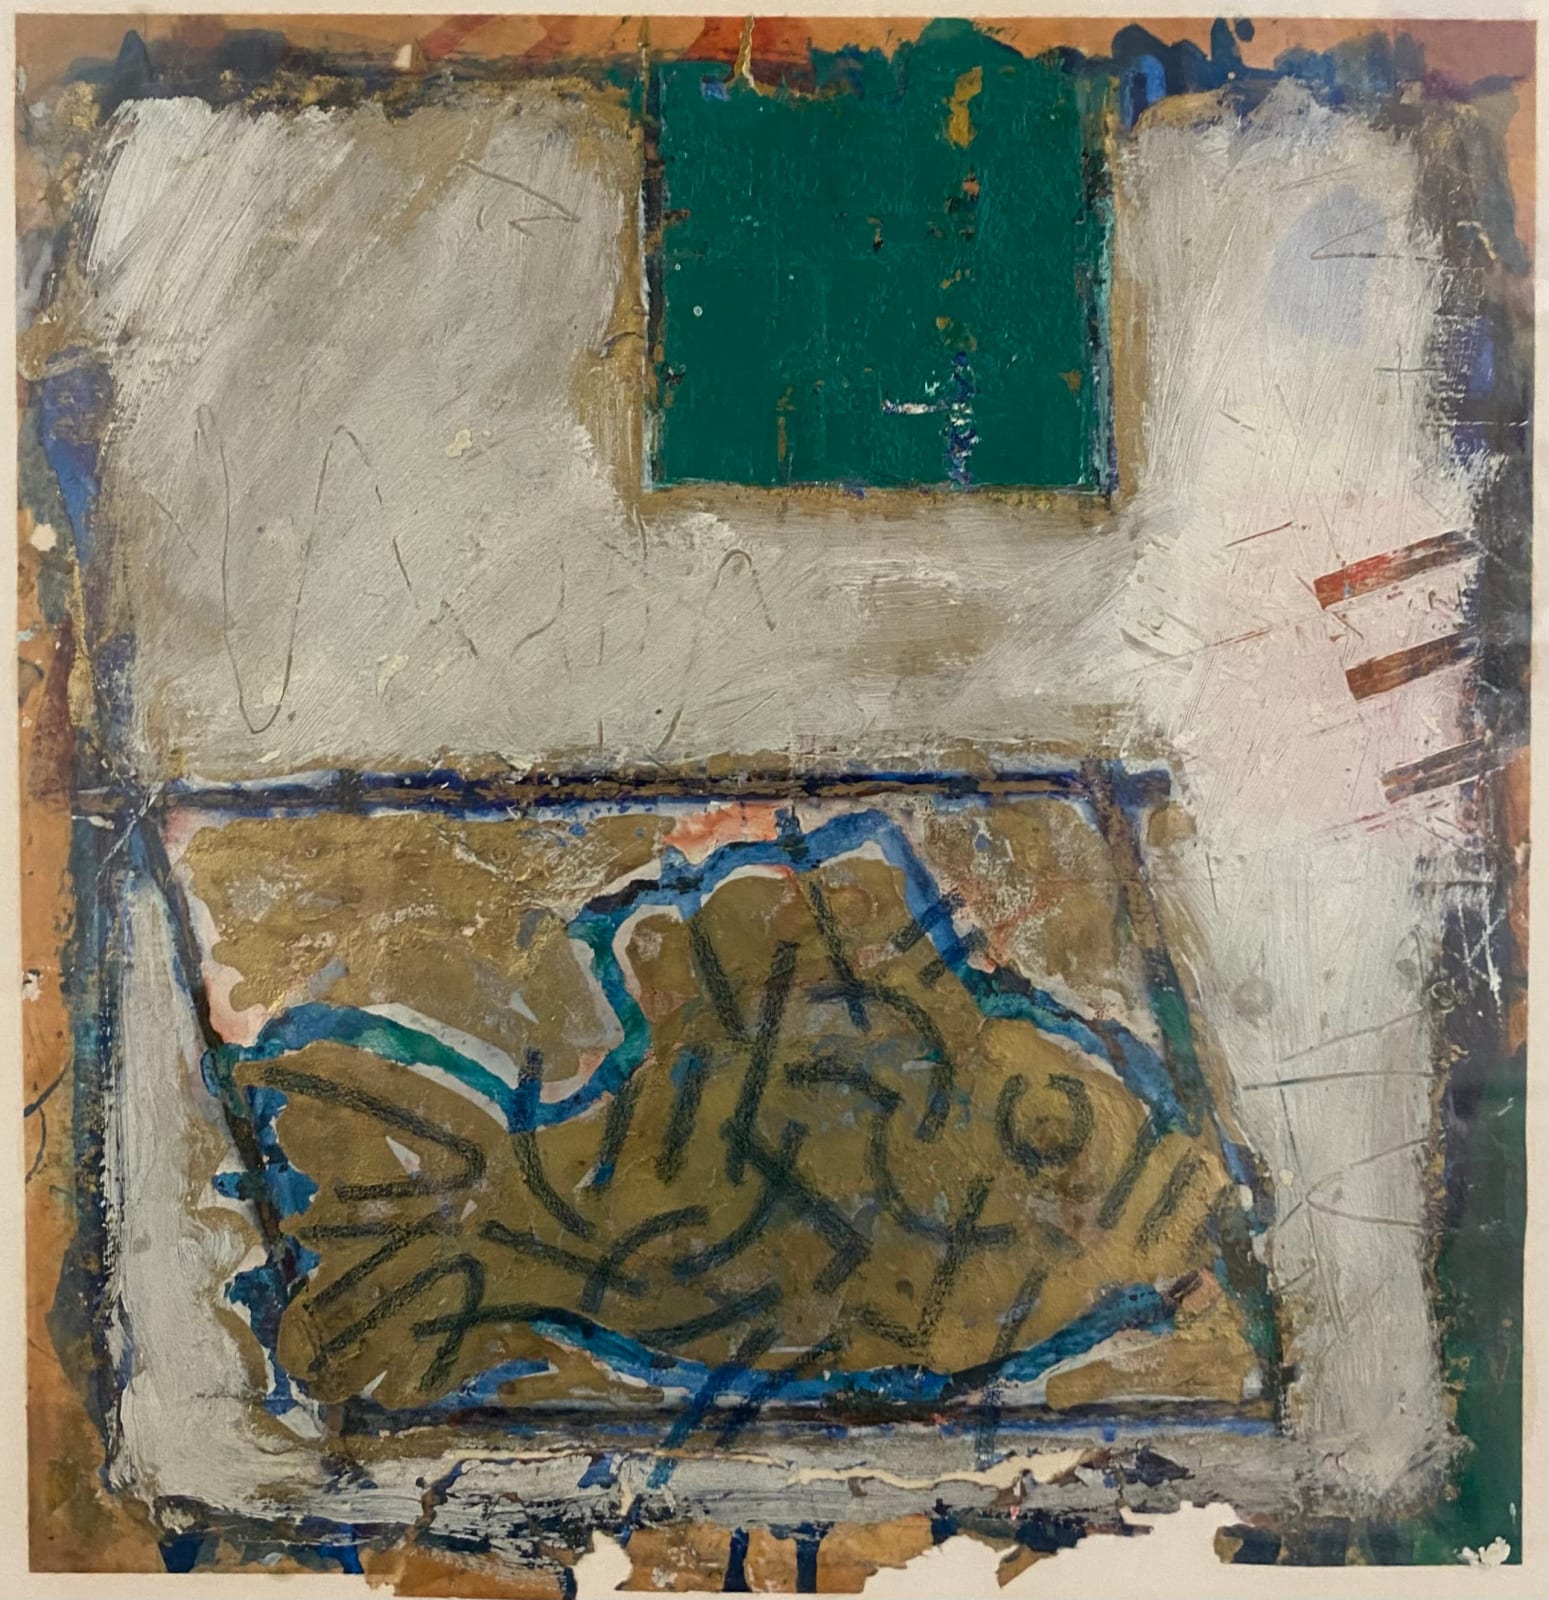 Tom Wood, Green Square Gold Fish, 1987